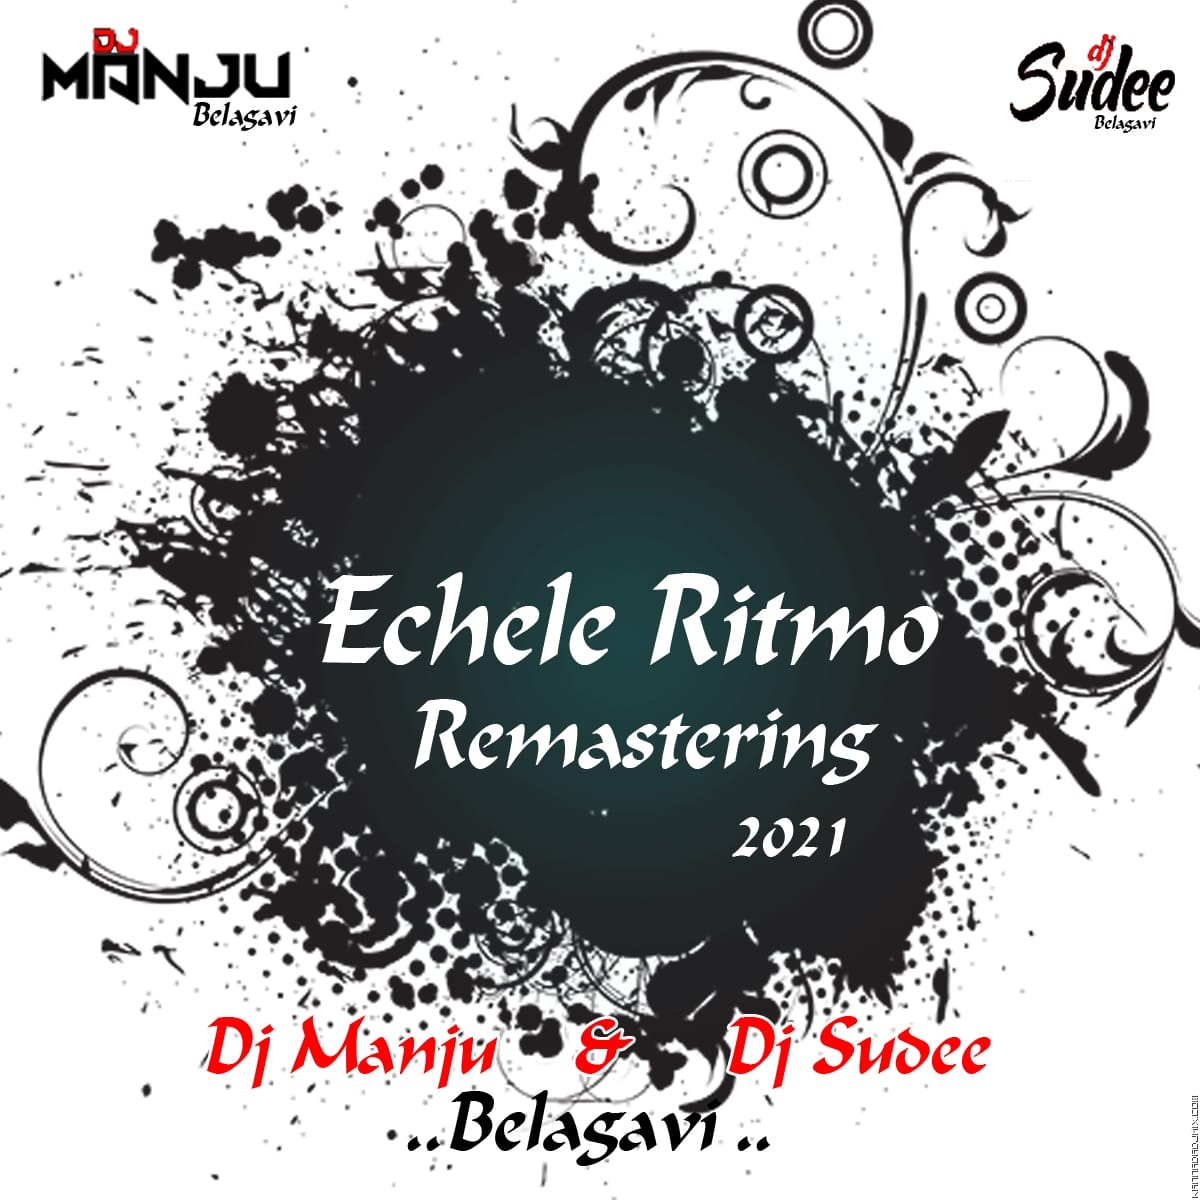 ECHELE RITMO REMASTERING DJ MANJU BELAGAVI & DJ SUDEE BELAGAVI 2021.mp3